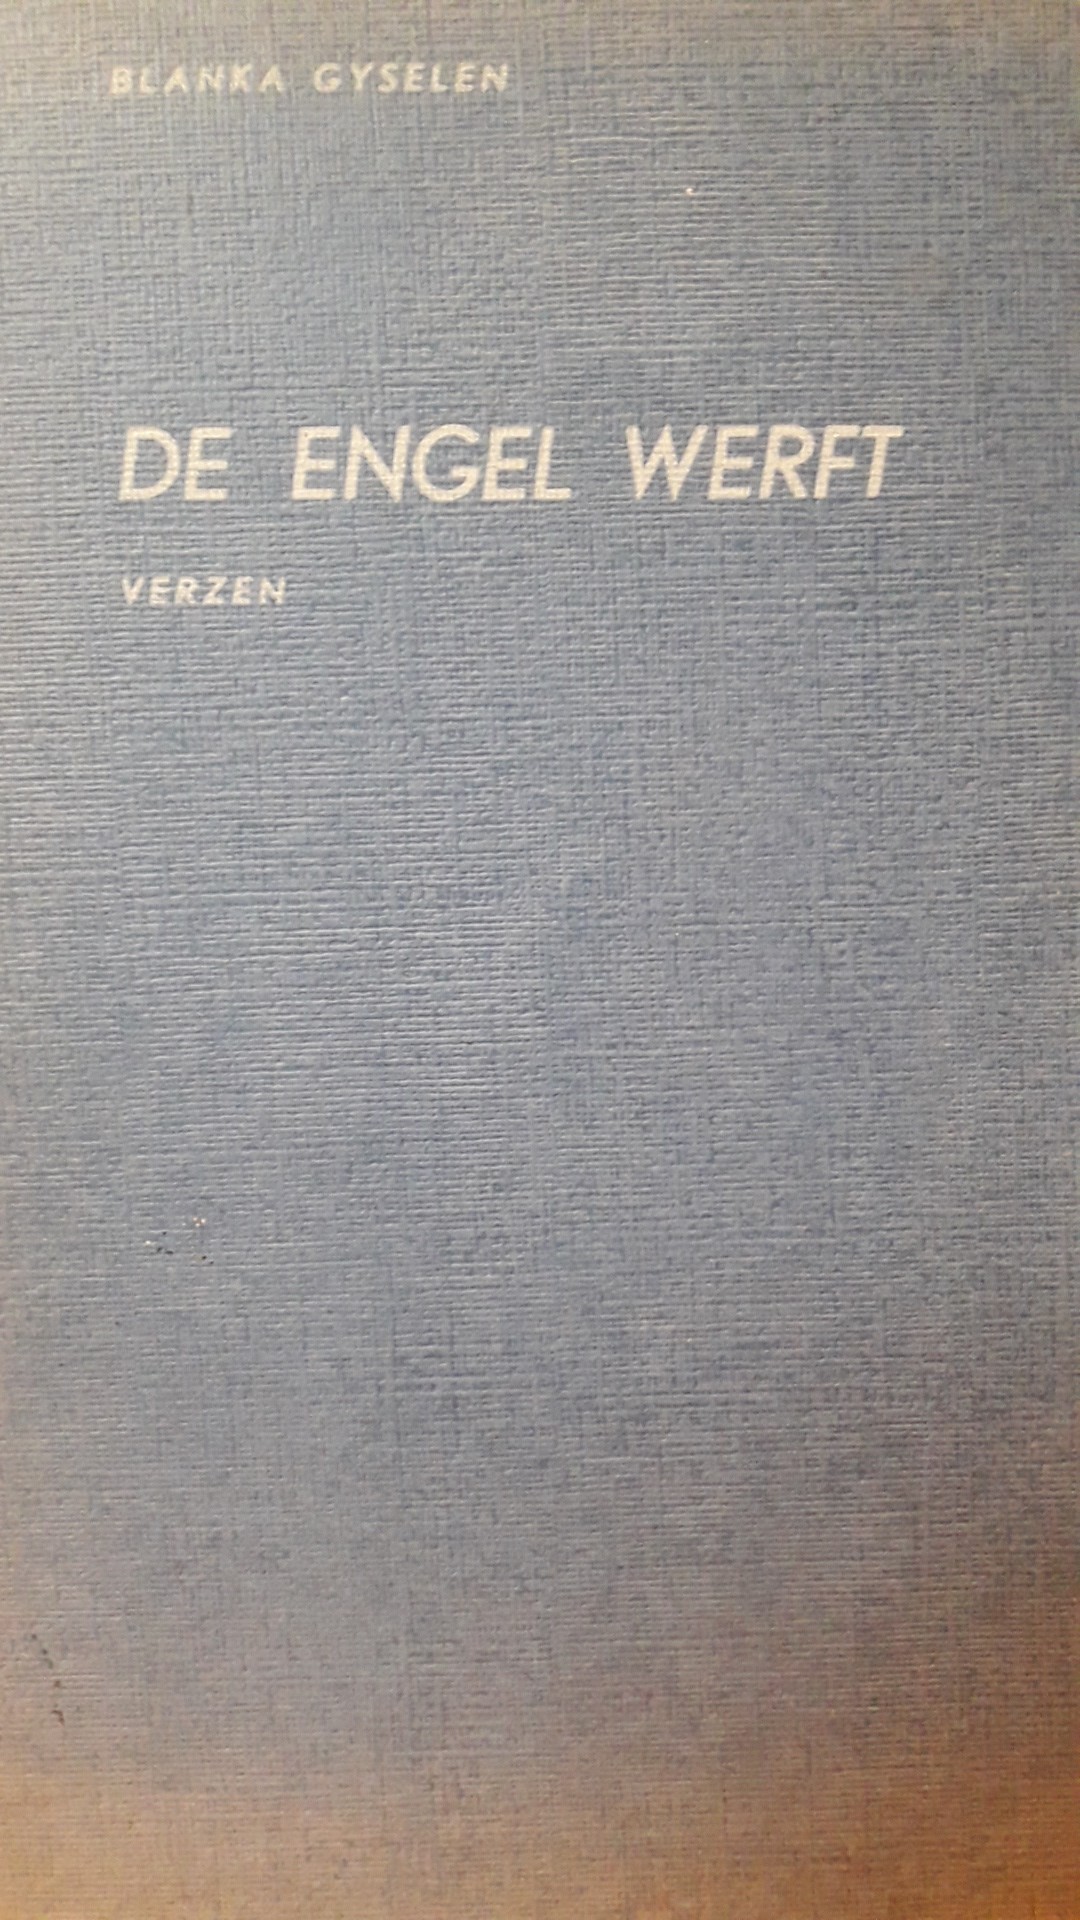 Blanka Gyselen - De engle werft verzen - prive druk 1952 / 40 blz